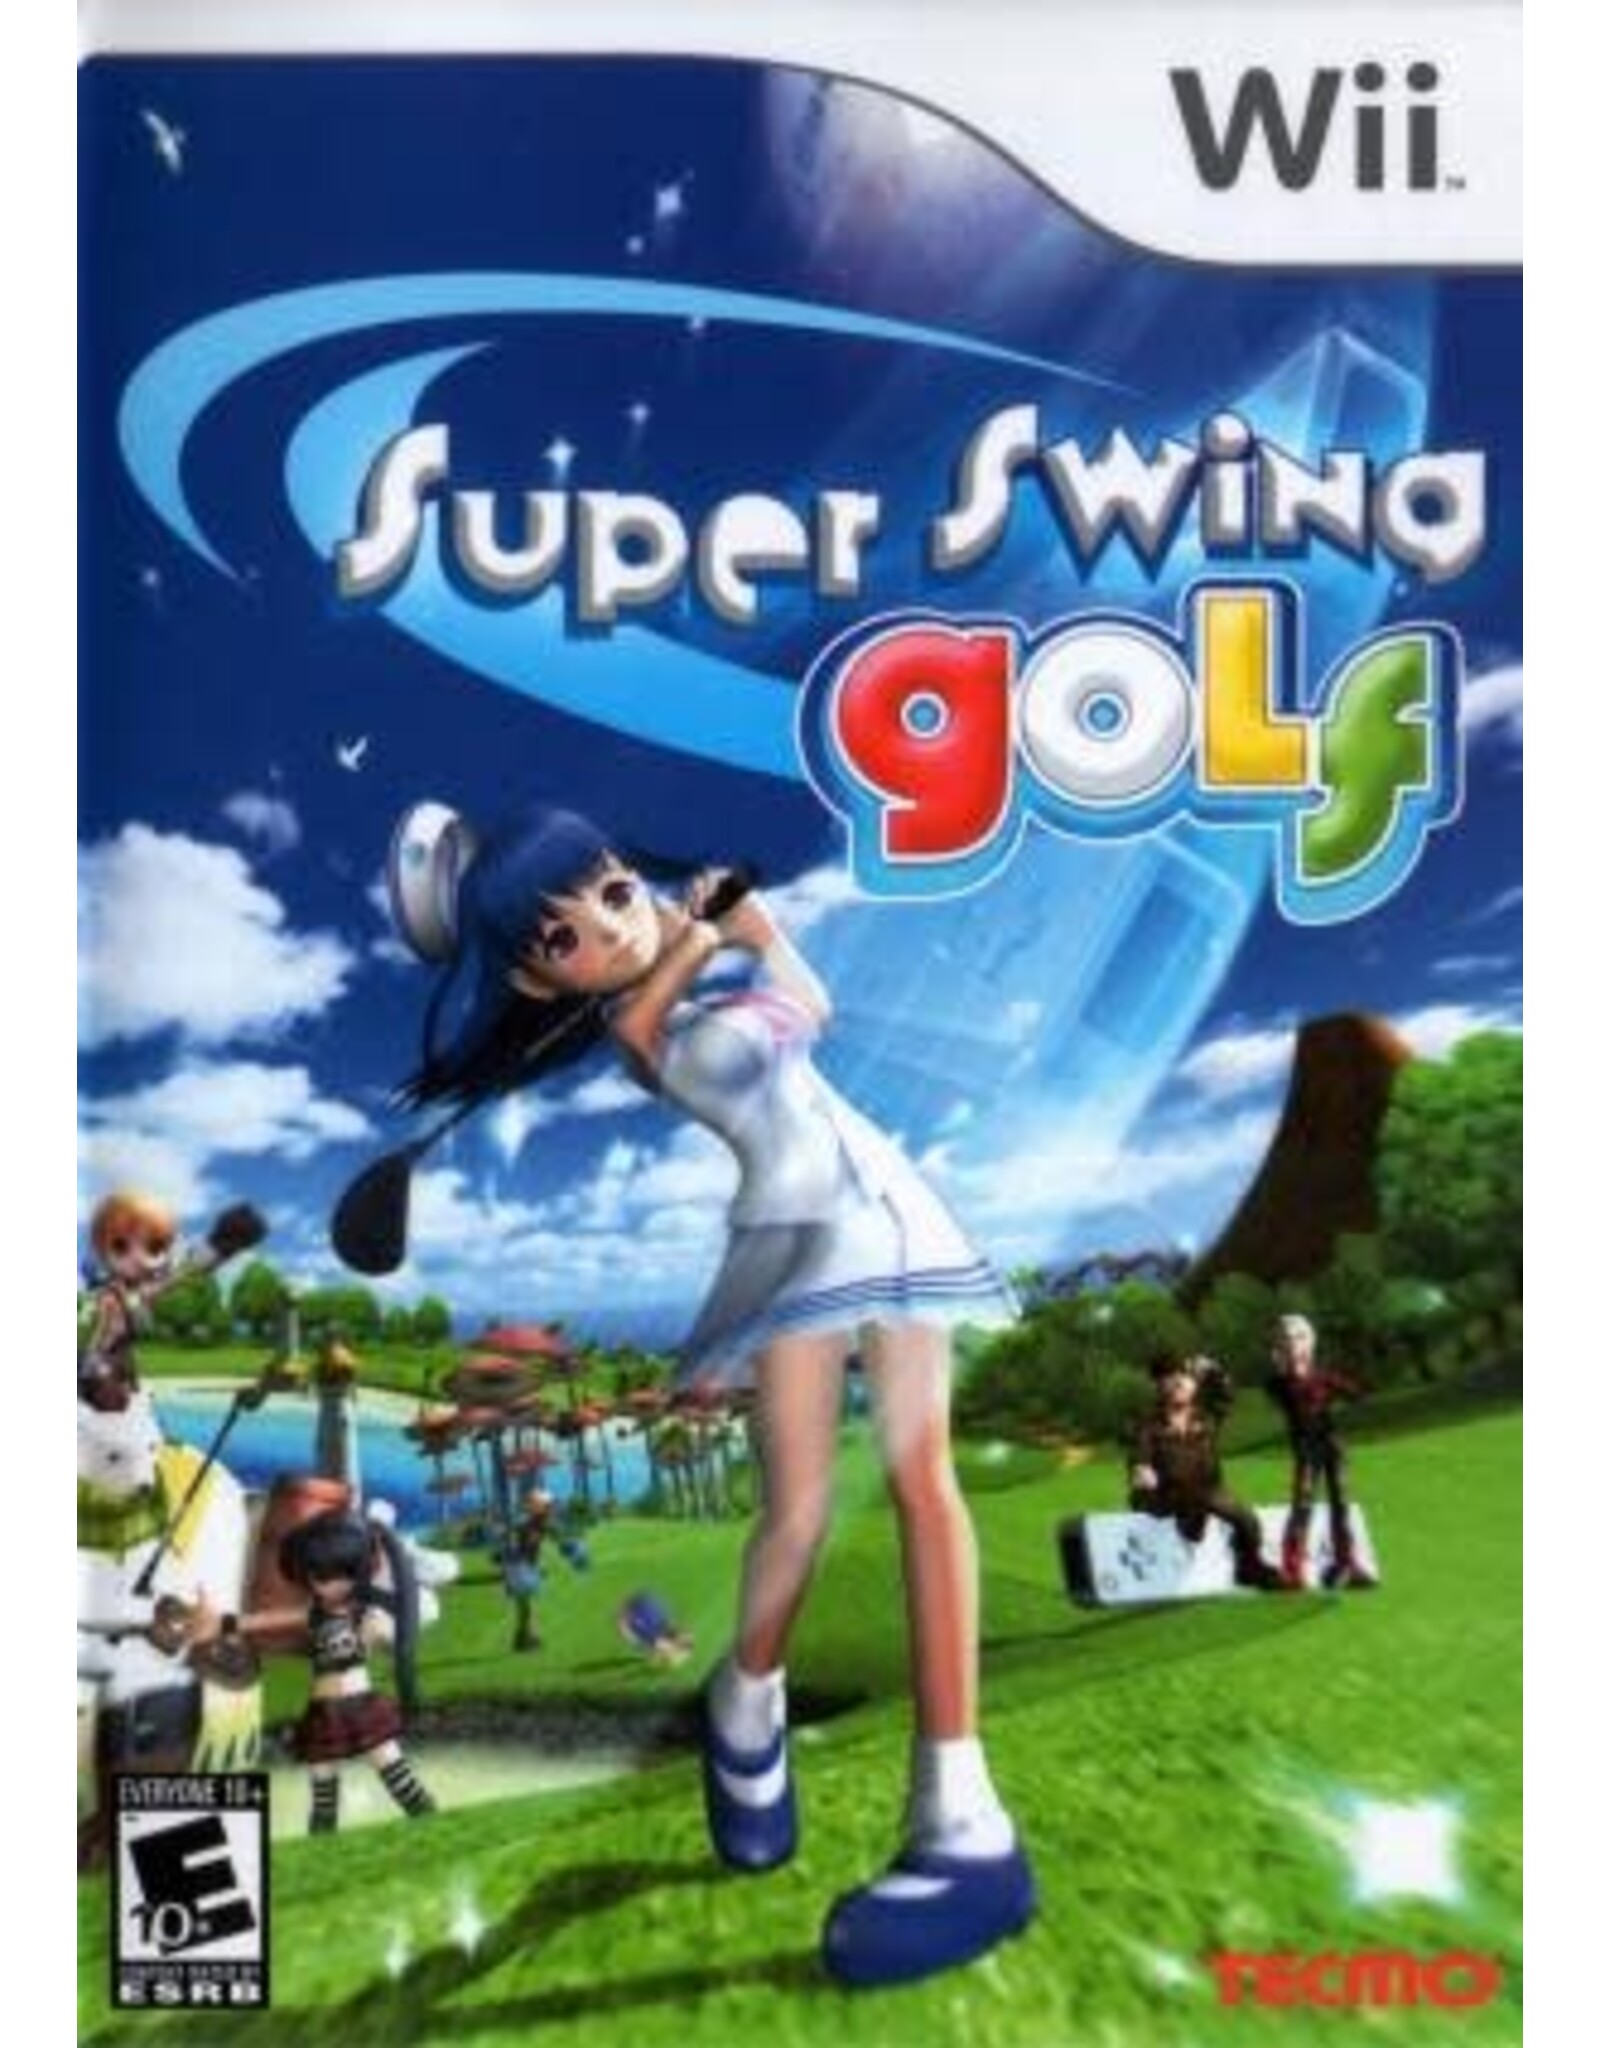 Wii Super Swing Golf (CiB)